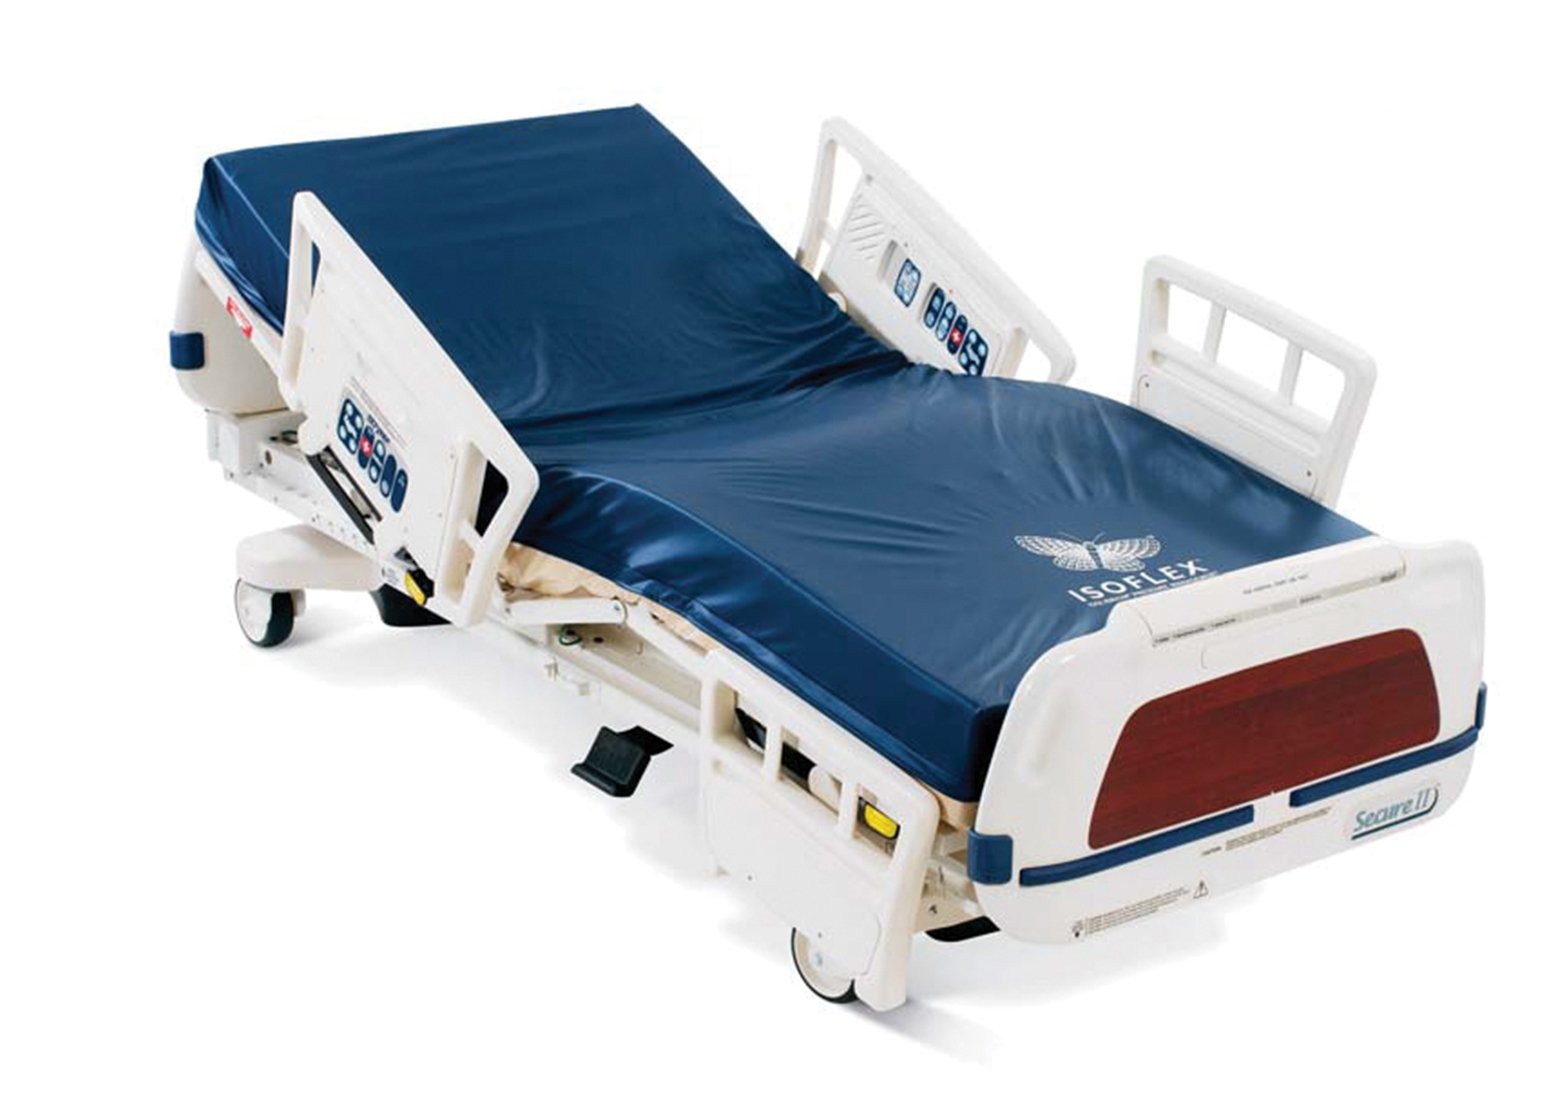 medical supply hospital bed mattress in tucson az